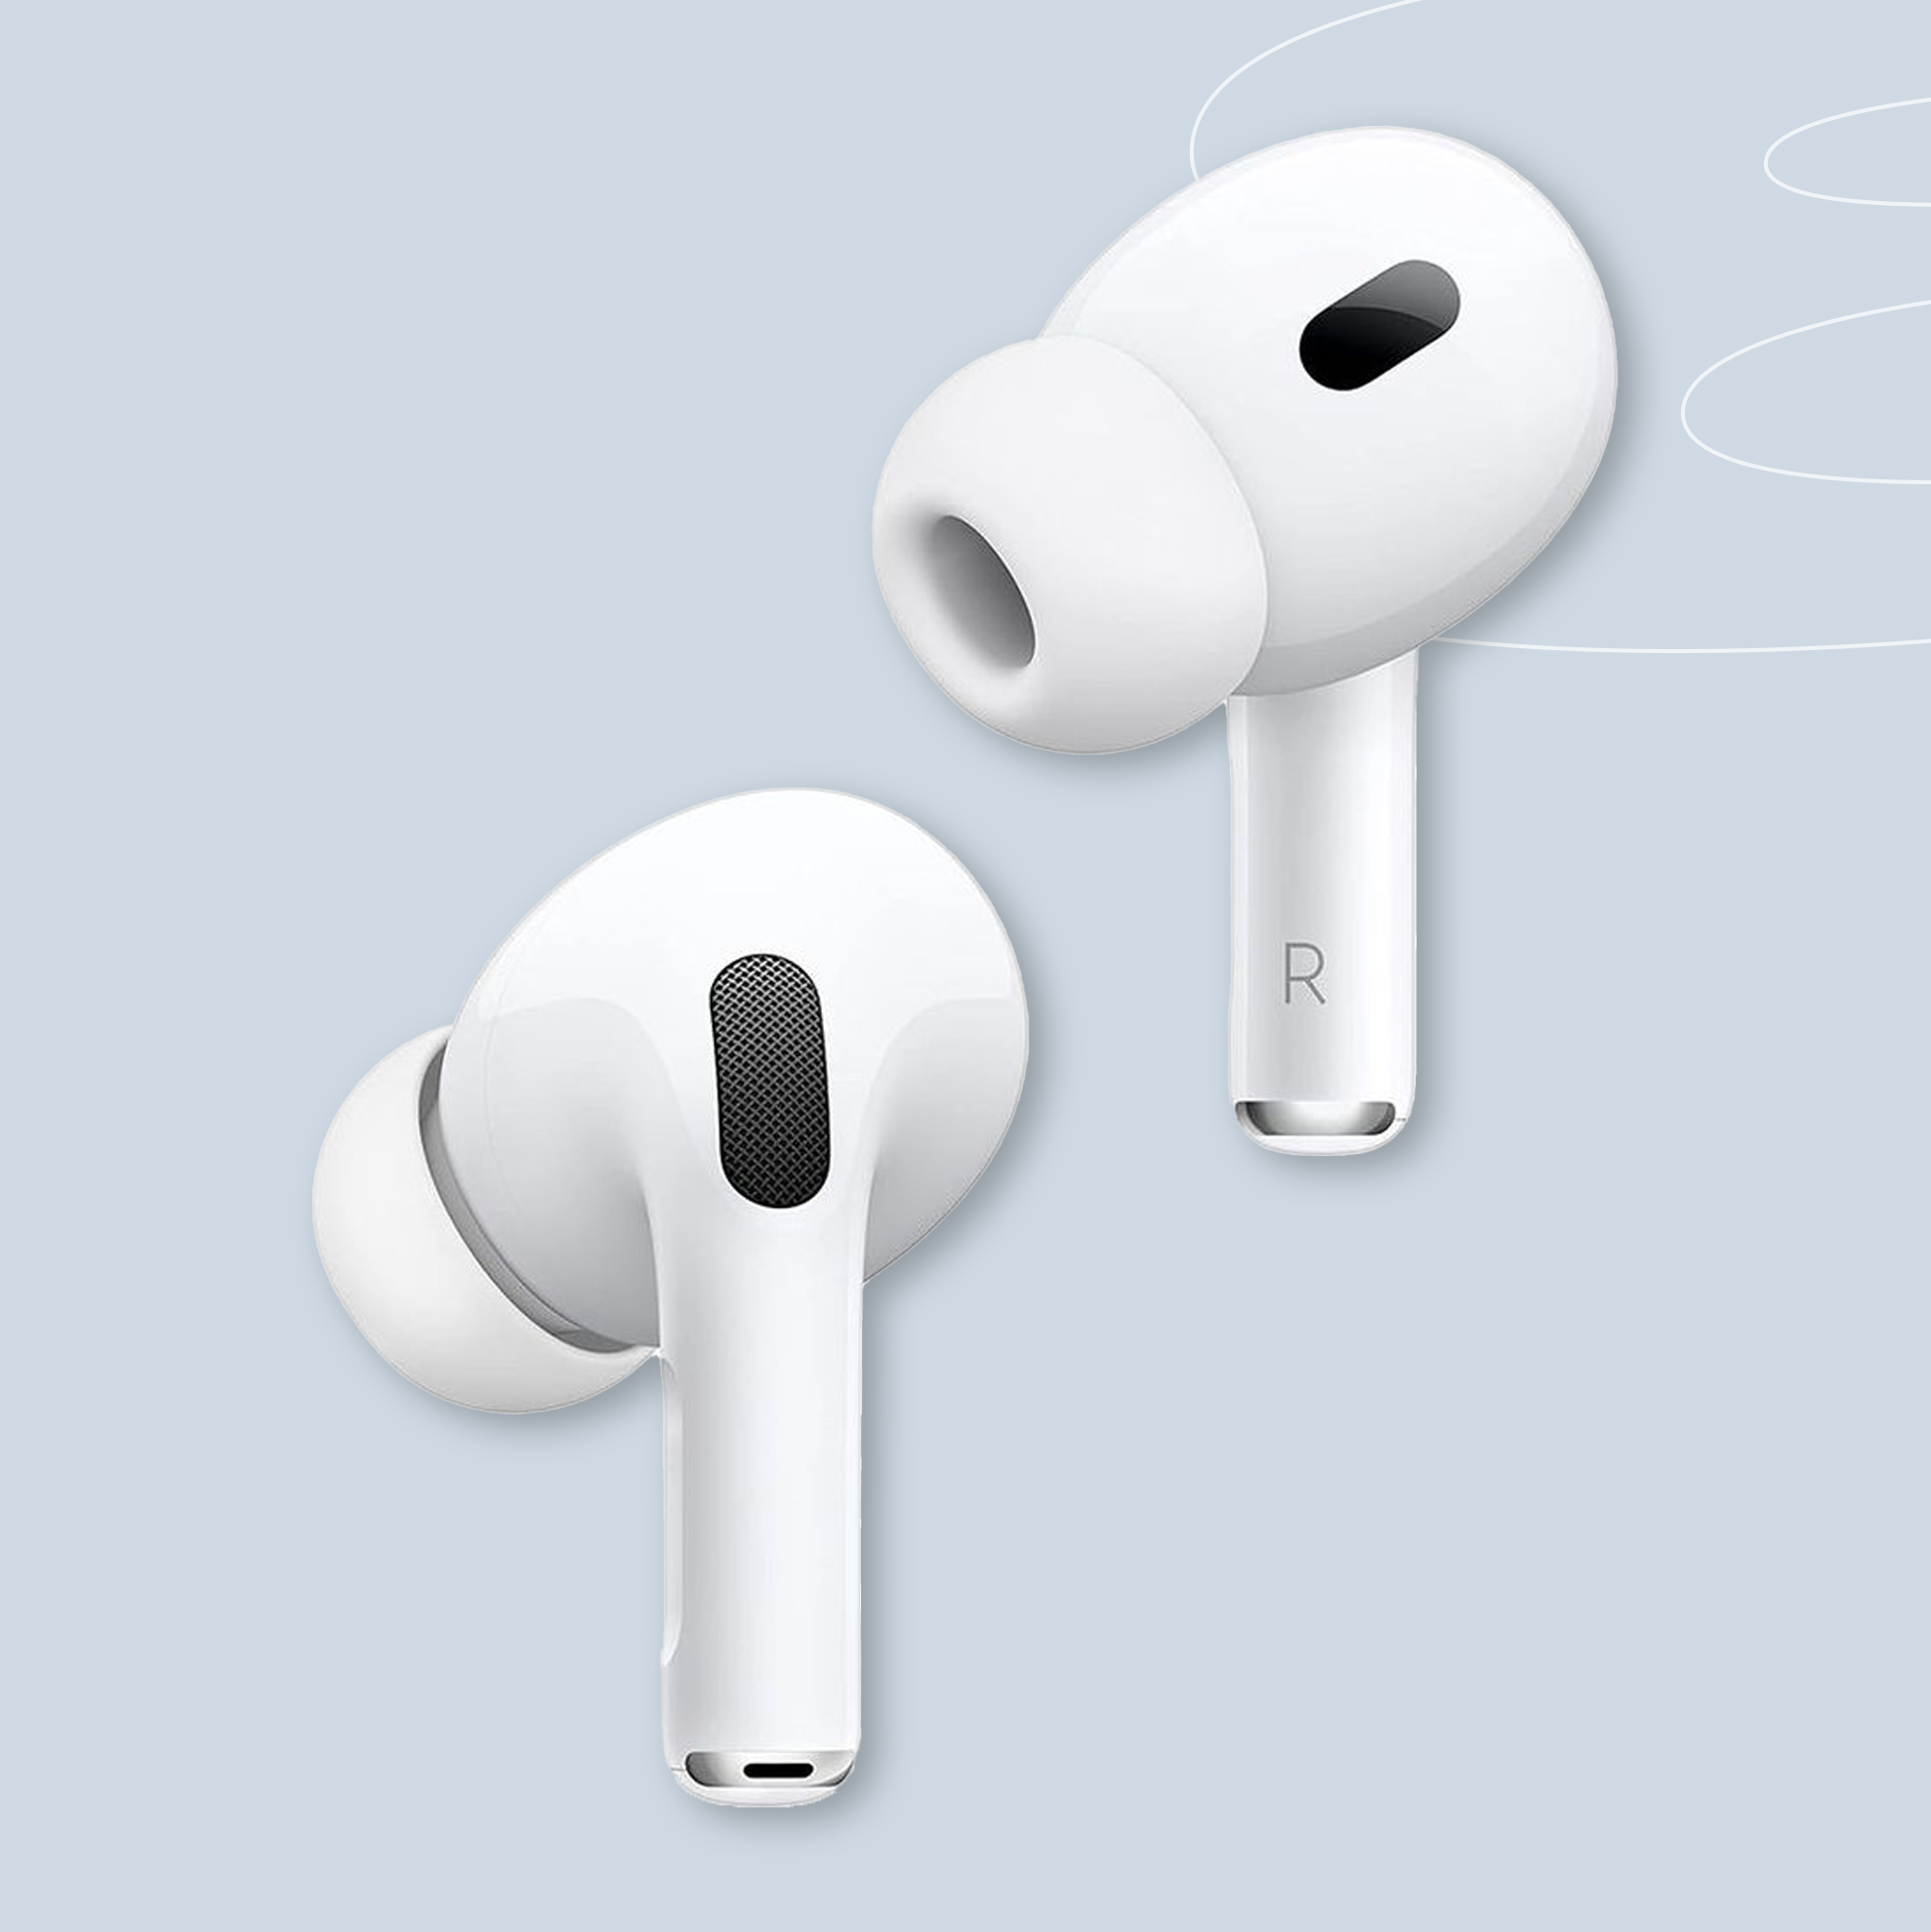 6 Best Wireless Earbuds for iPhones